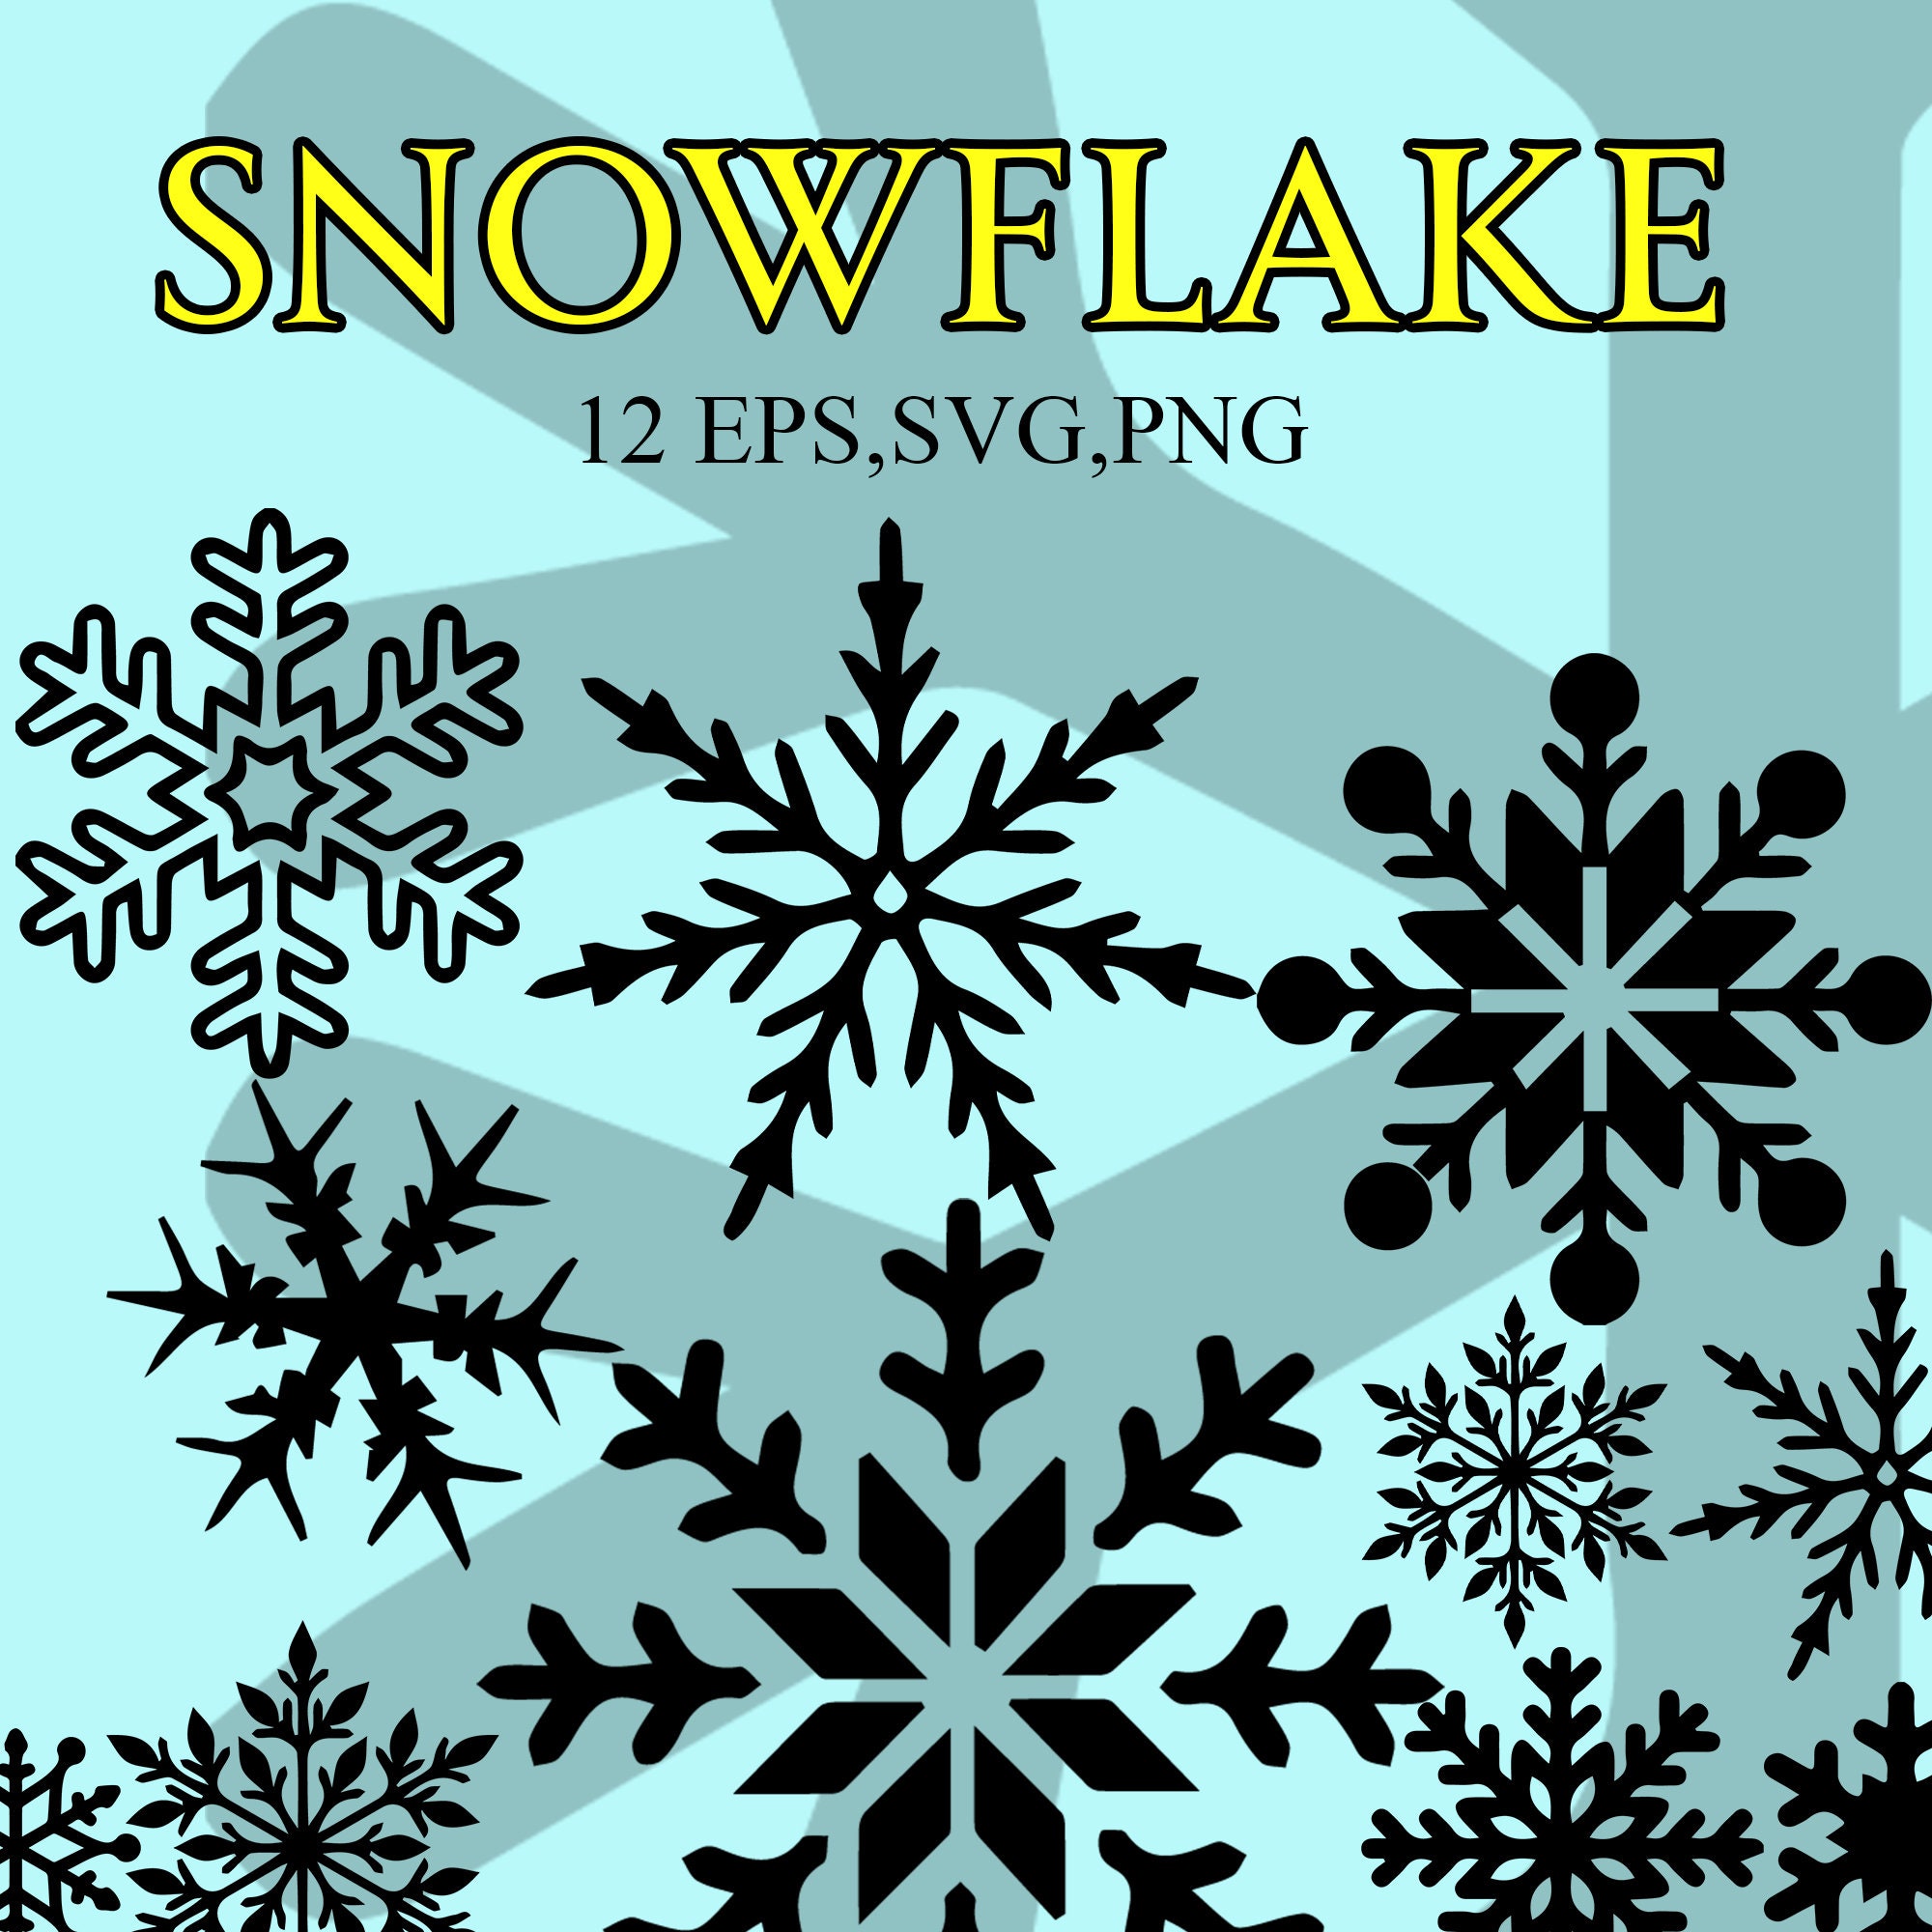 Christmas Snowflake Stickers Peace Merry Xmas Sticker Vinyl Sticker Size 5in